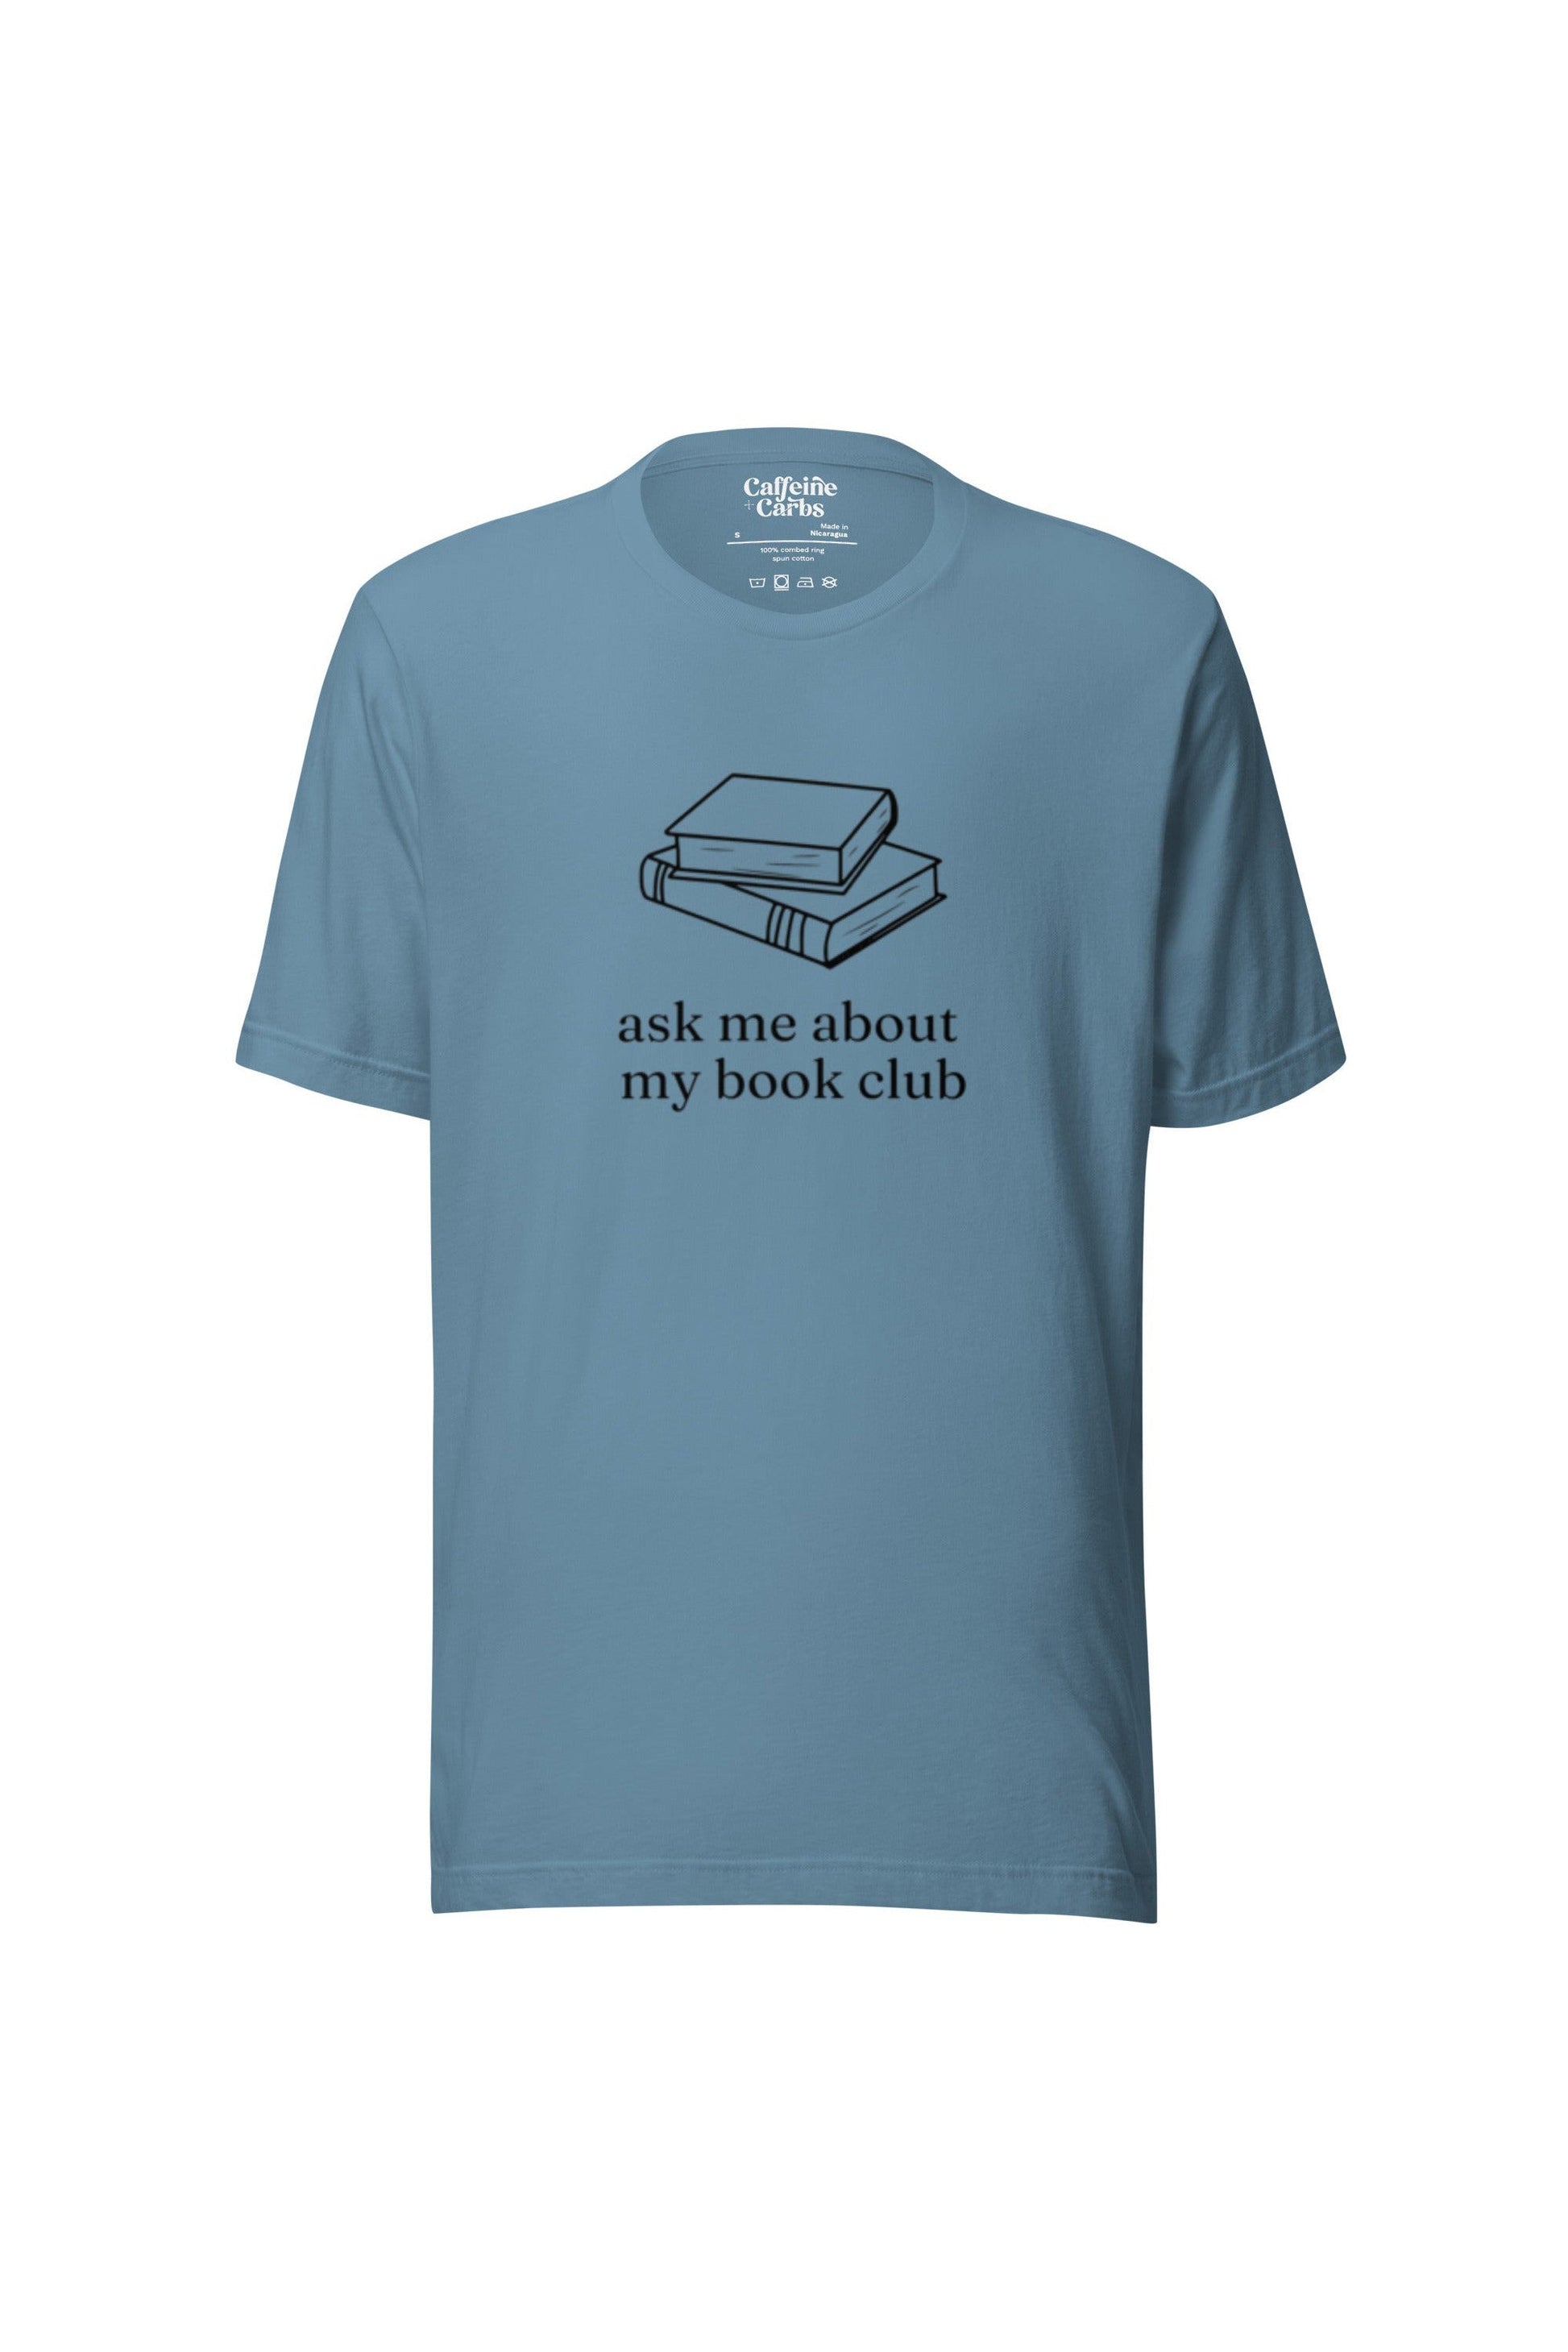 Ask Me About My Book Club Shirt-Tee Shirt-Caffeine + Carbs-Steel Blue-S-Caffeine + Carbs